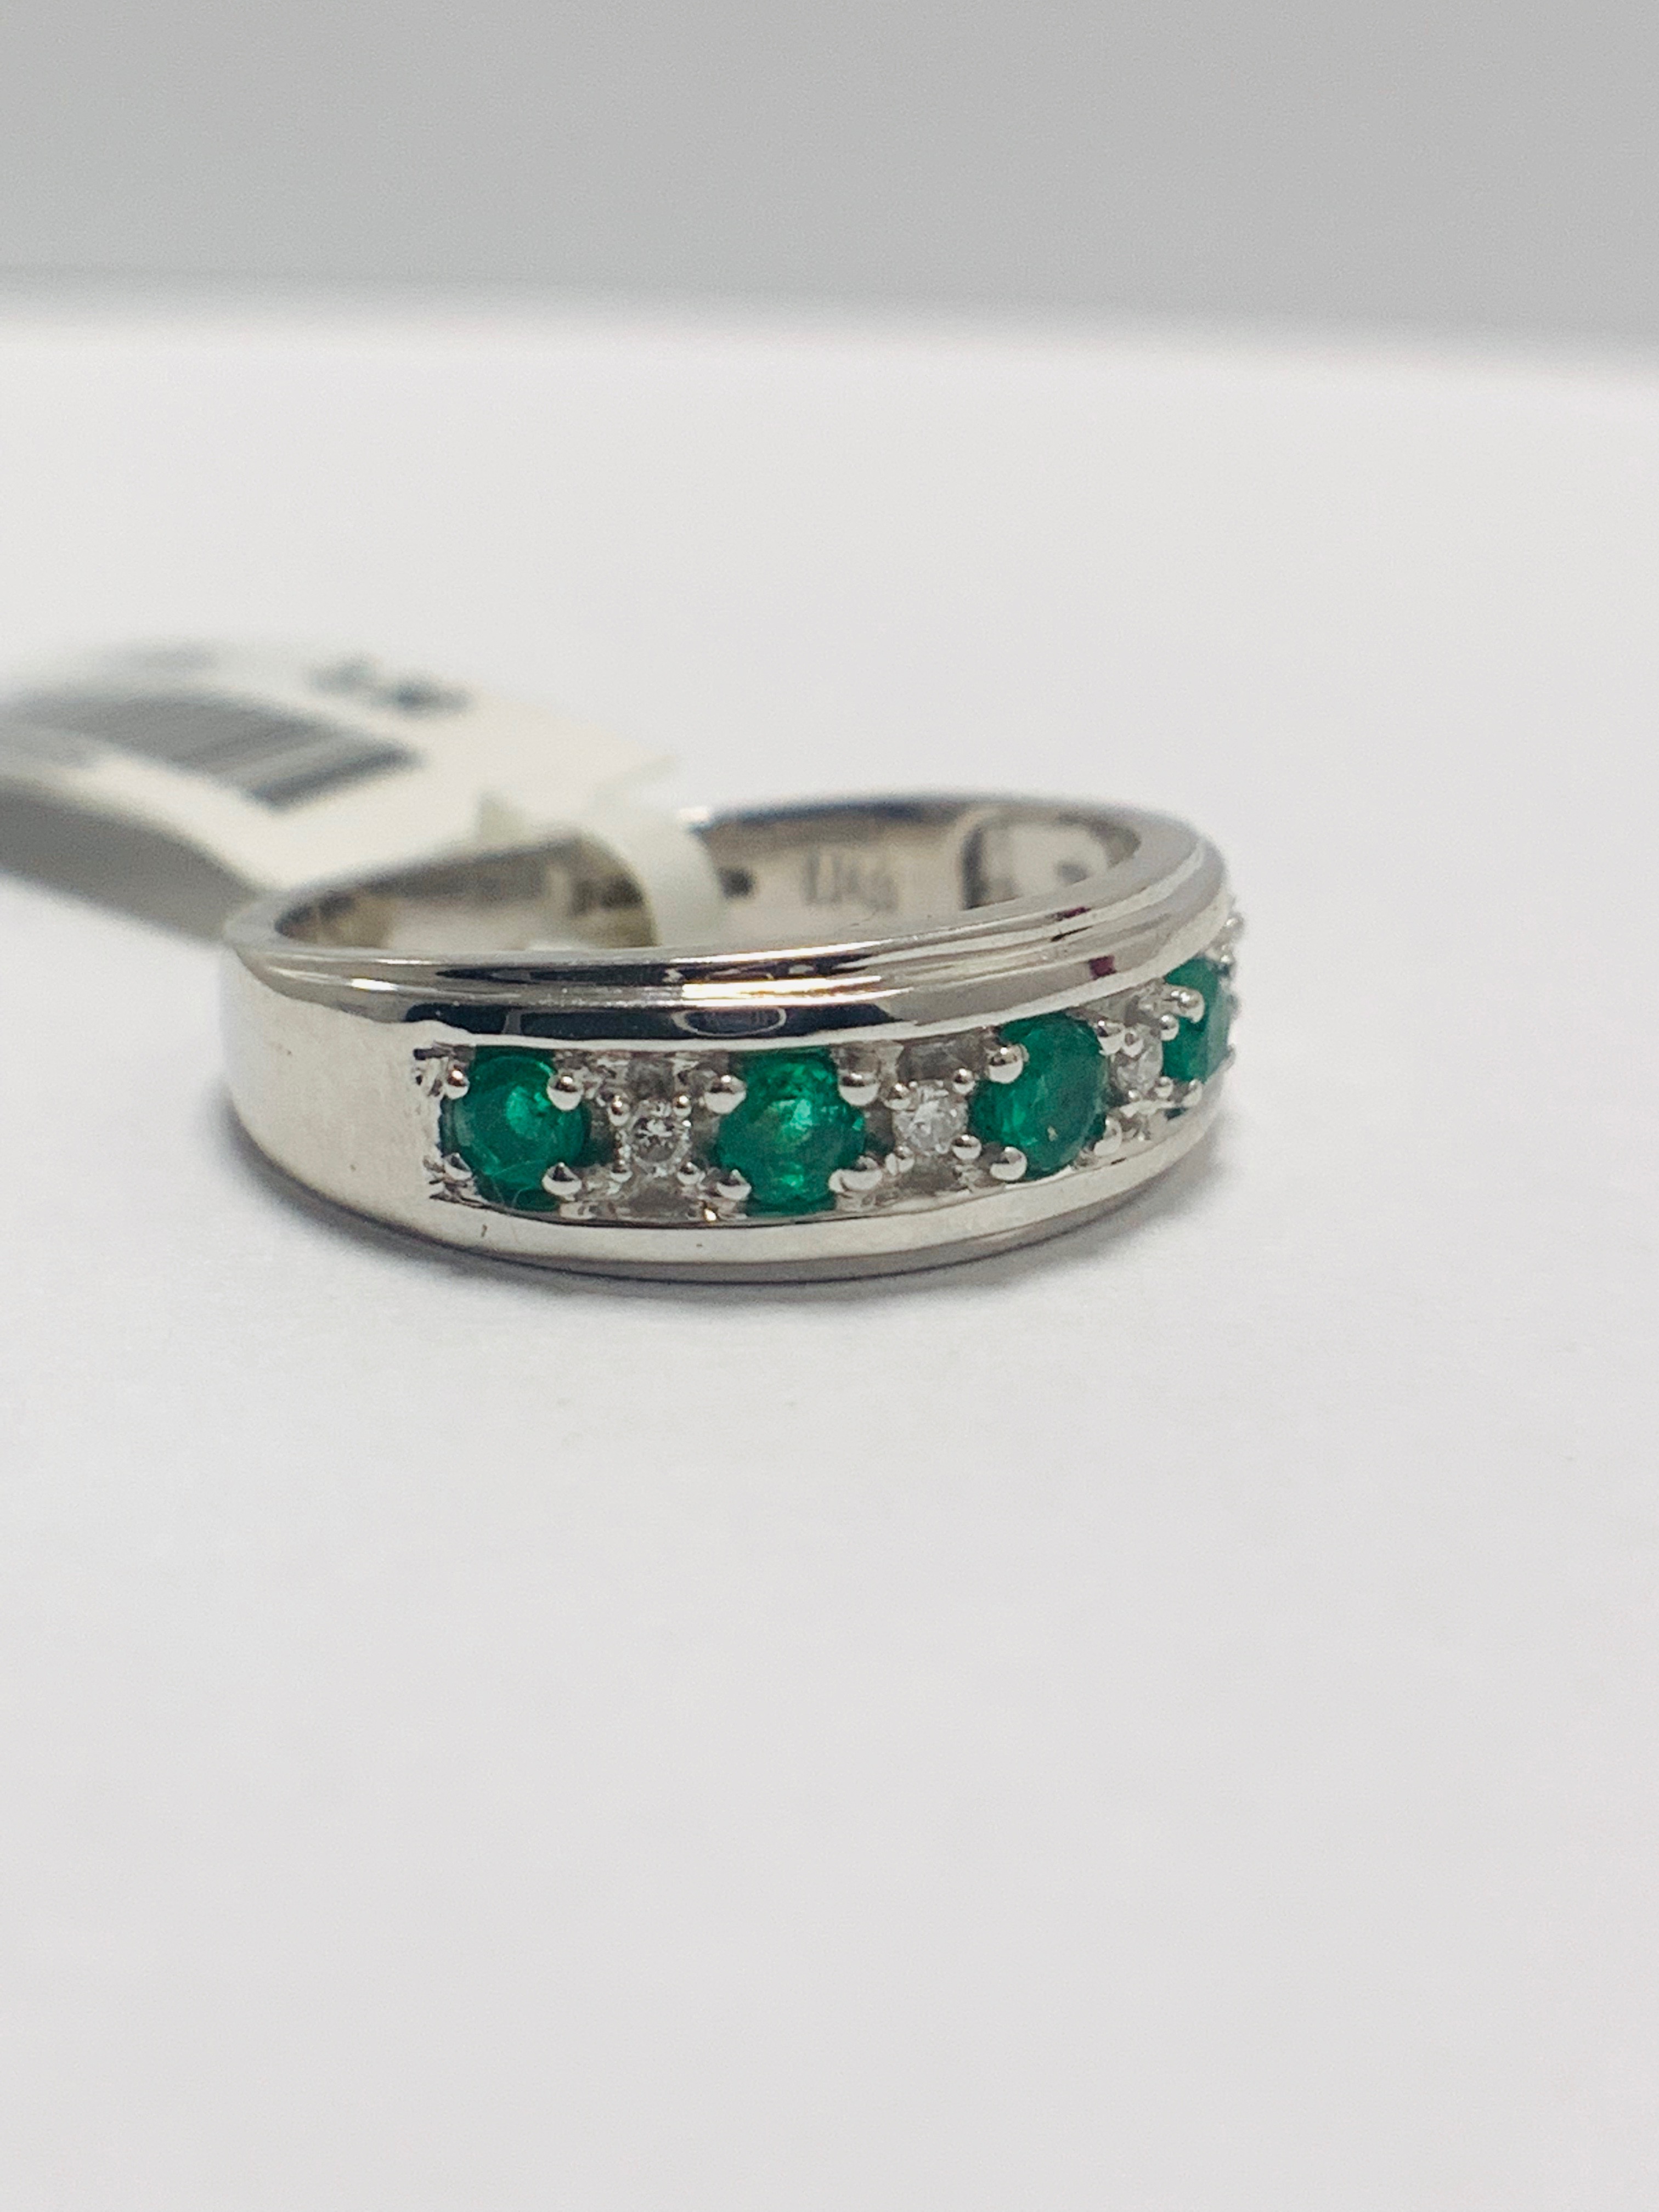 9ct white gold emerald diamond band ring. - Image 7 of 8